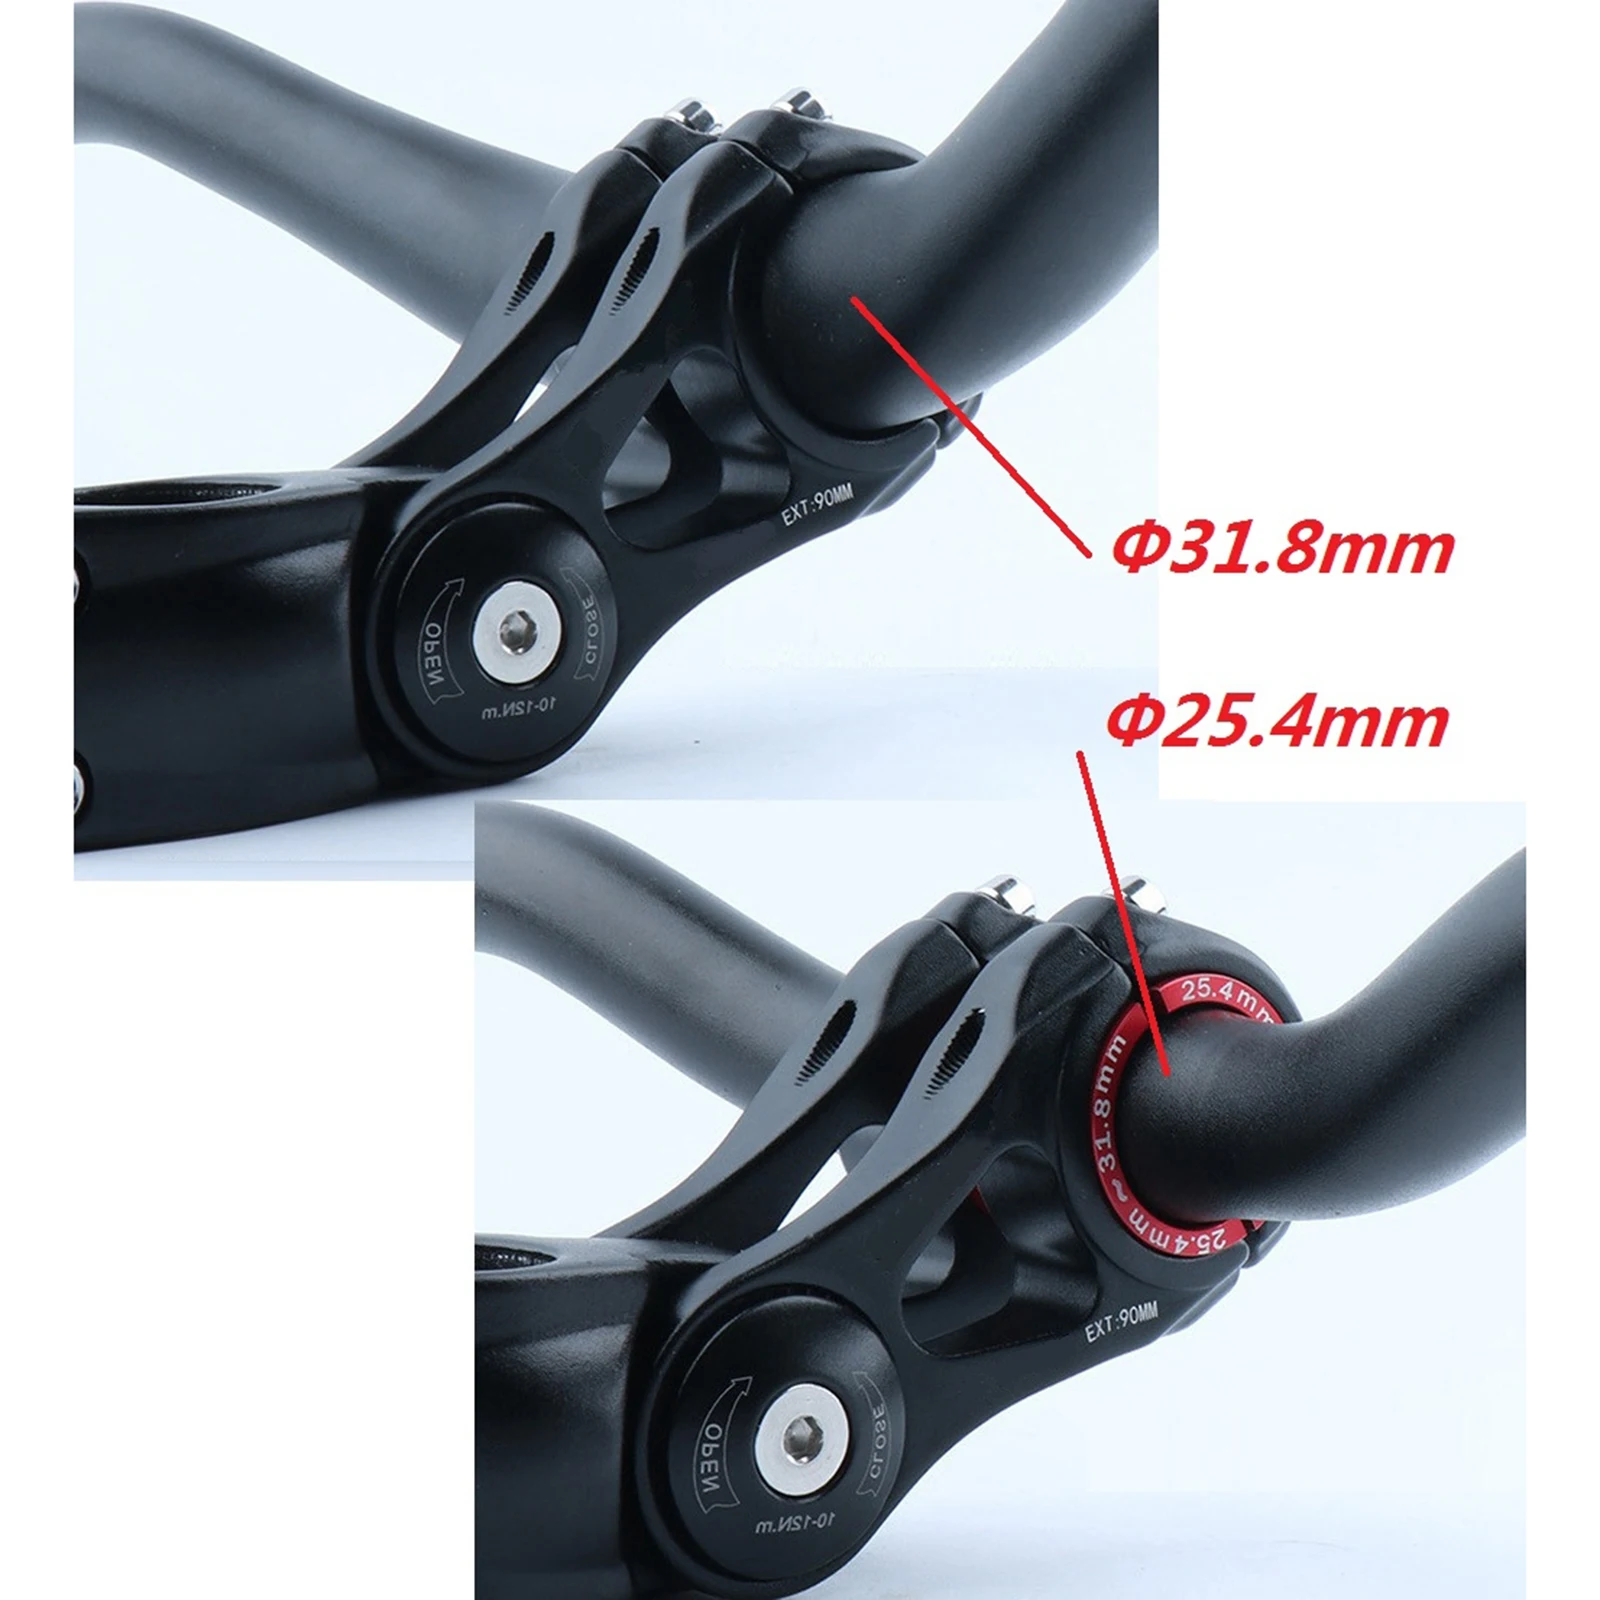 25.4- 31.8mm Stem Size Reducer Bicycle Bike Handlebar Shim Spacer Adapter Sleeve